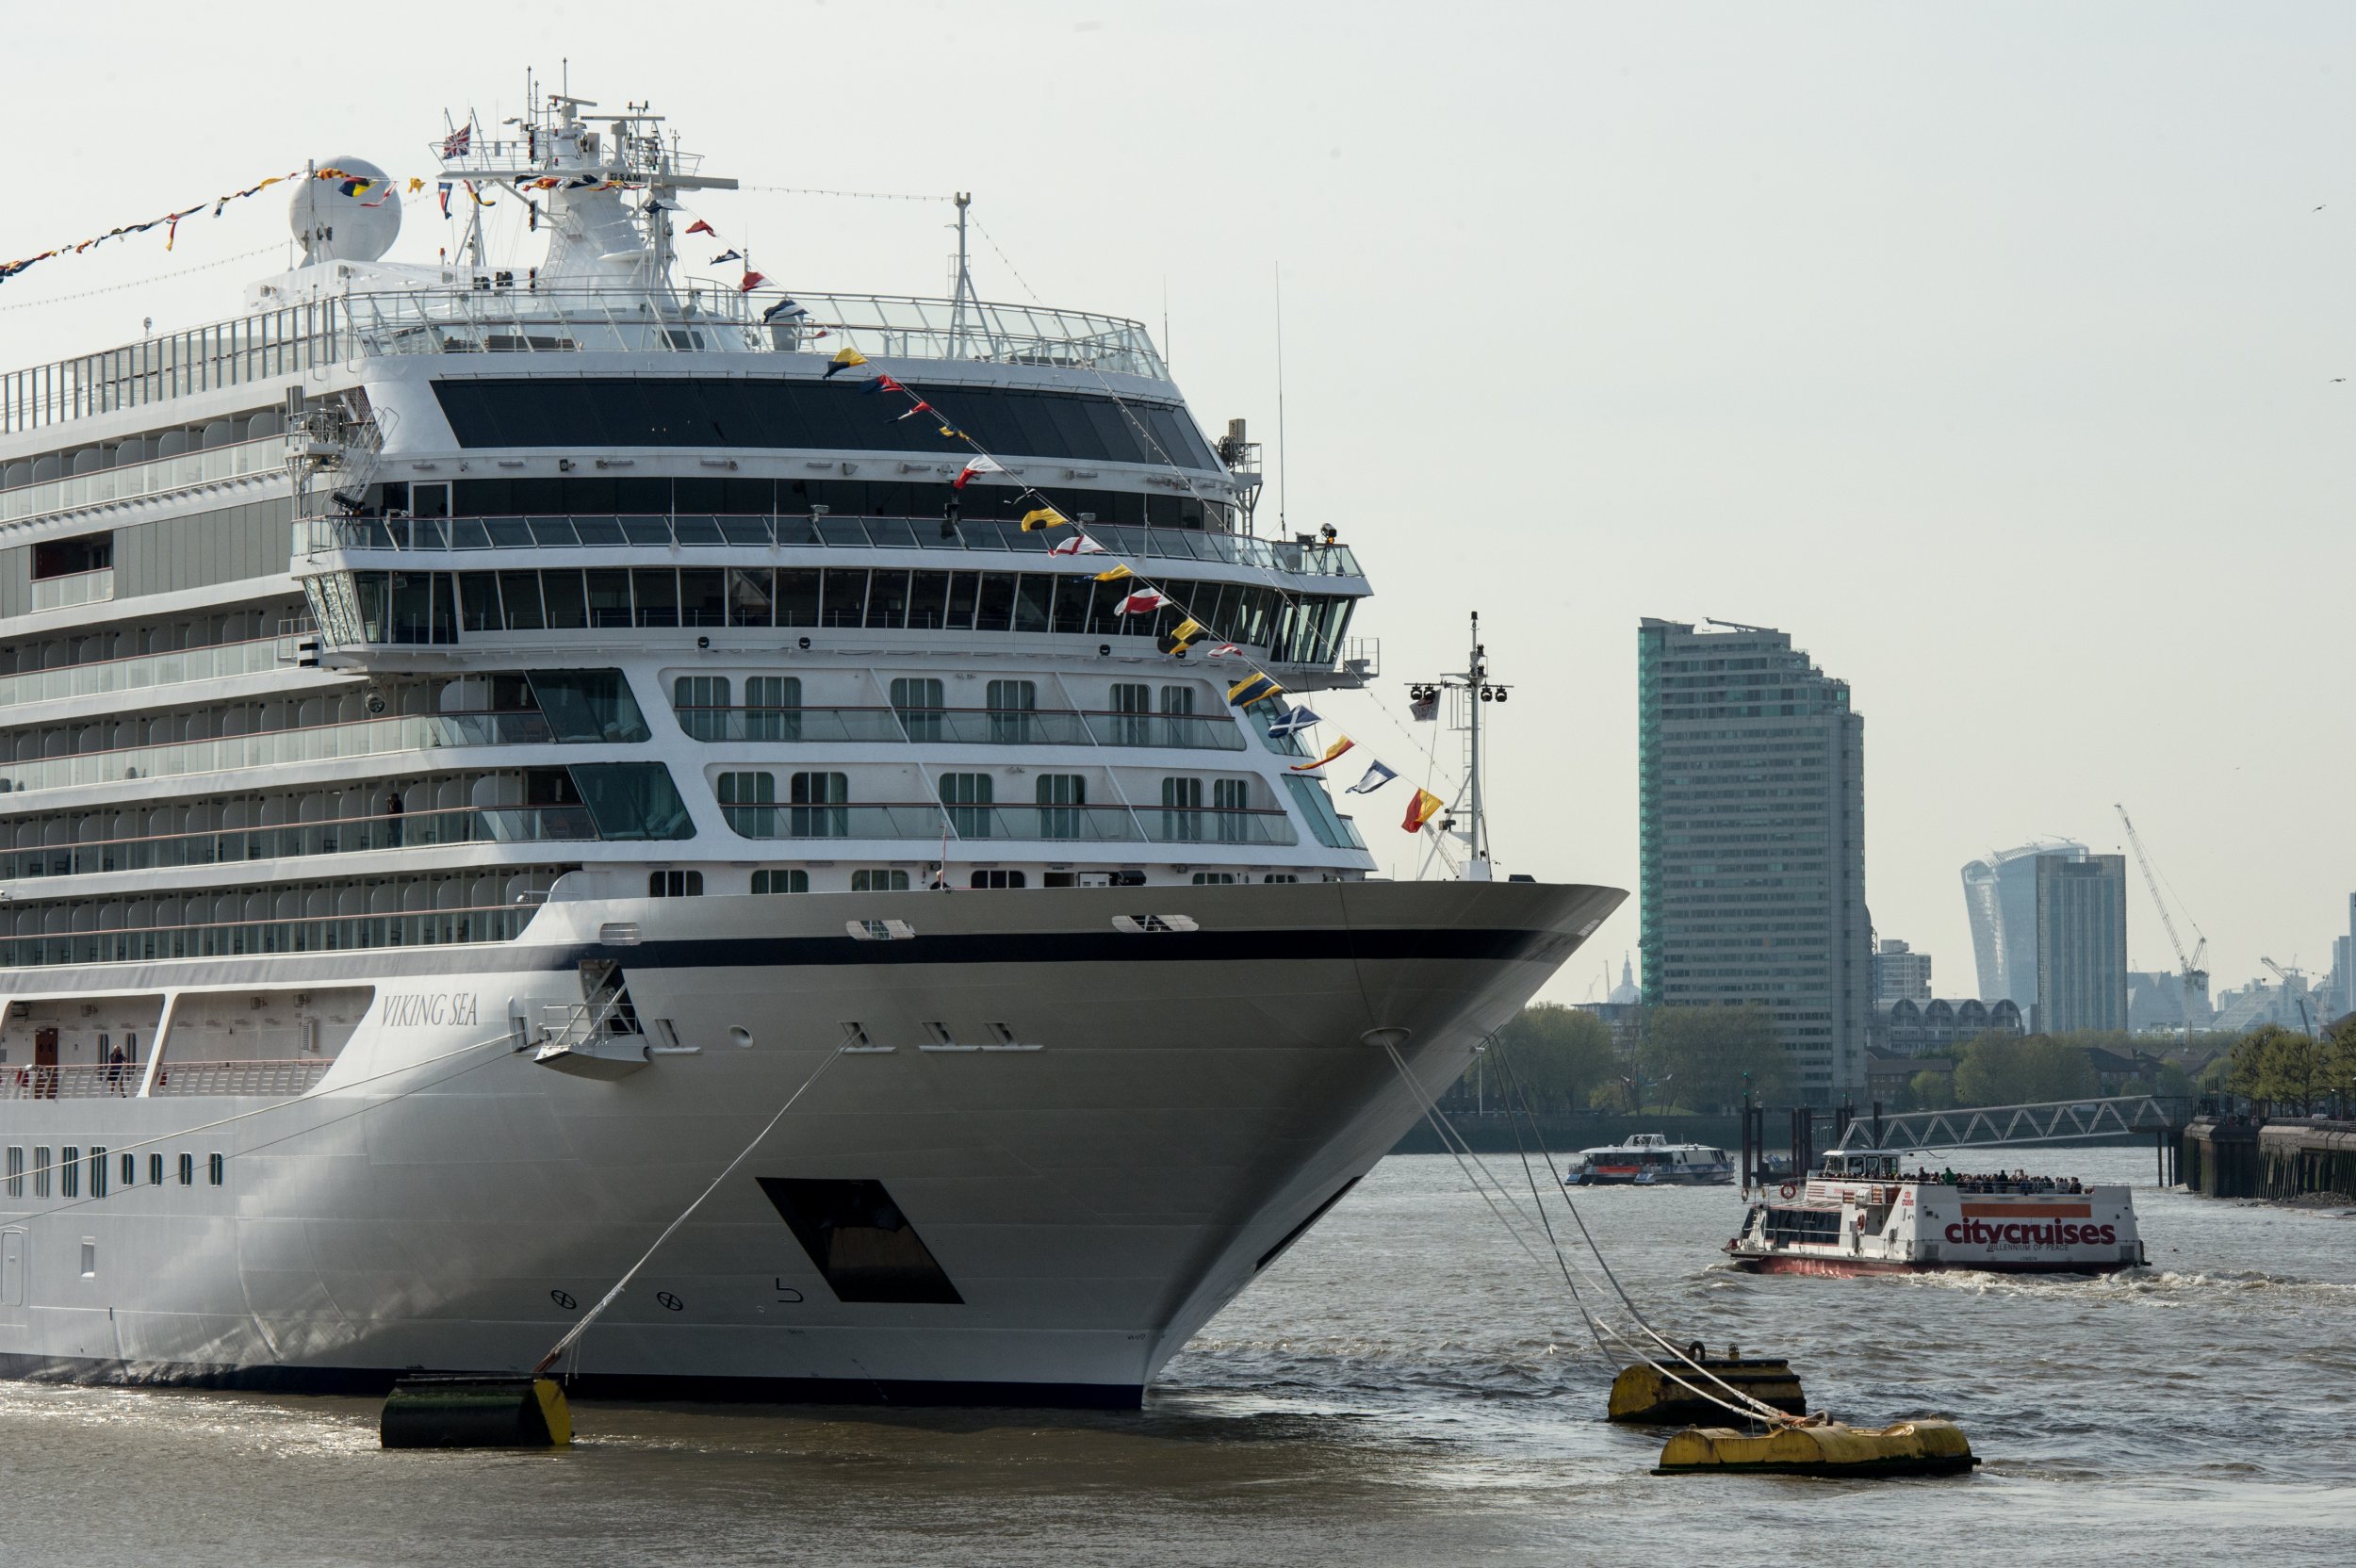 Cruise ship sexual assault